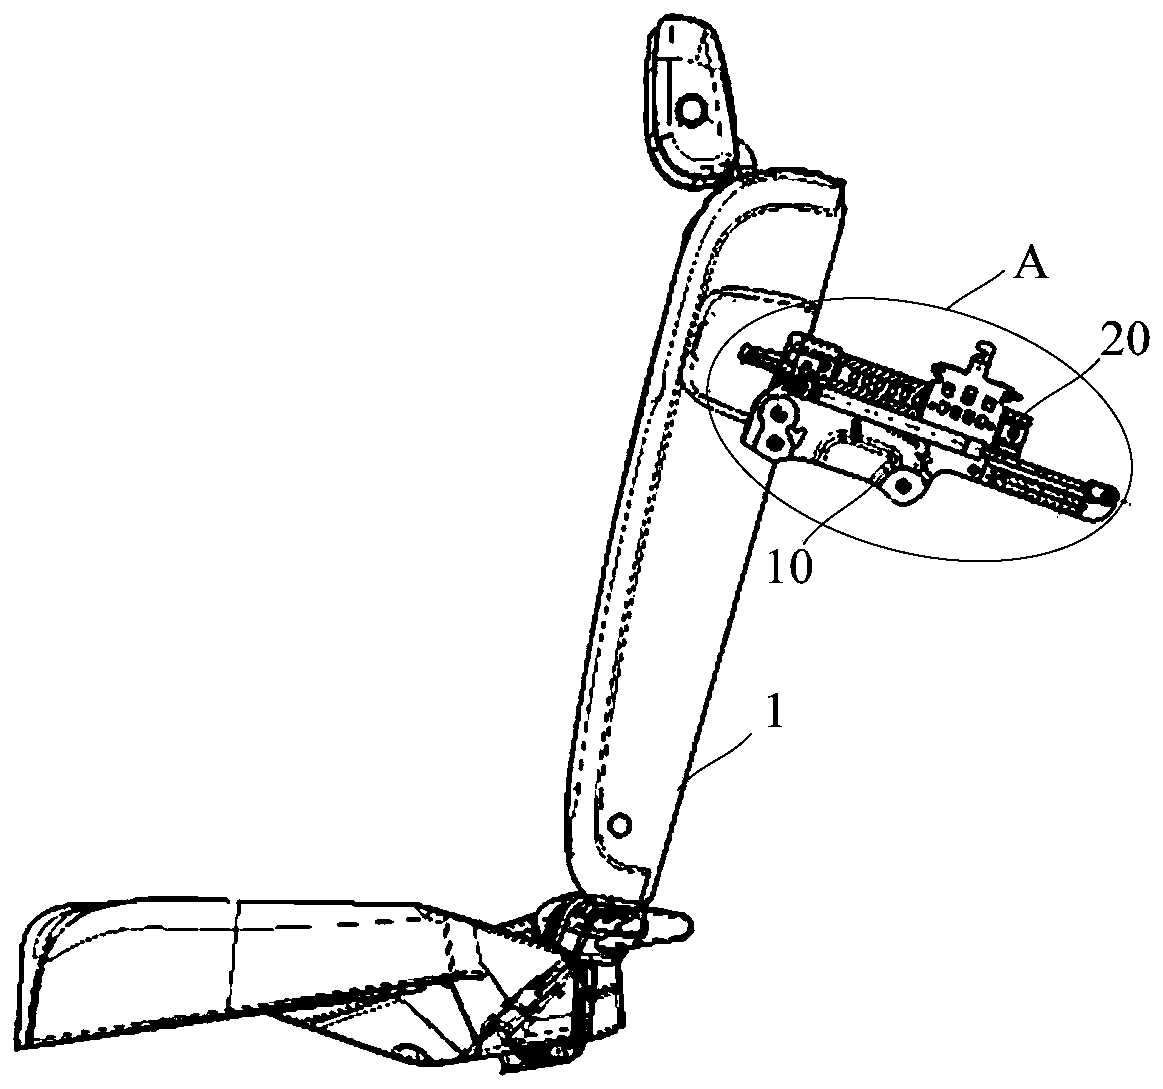 Seat bracket adjusting mechanism